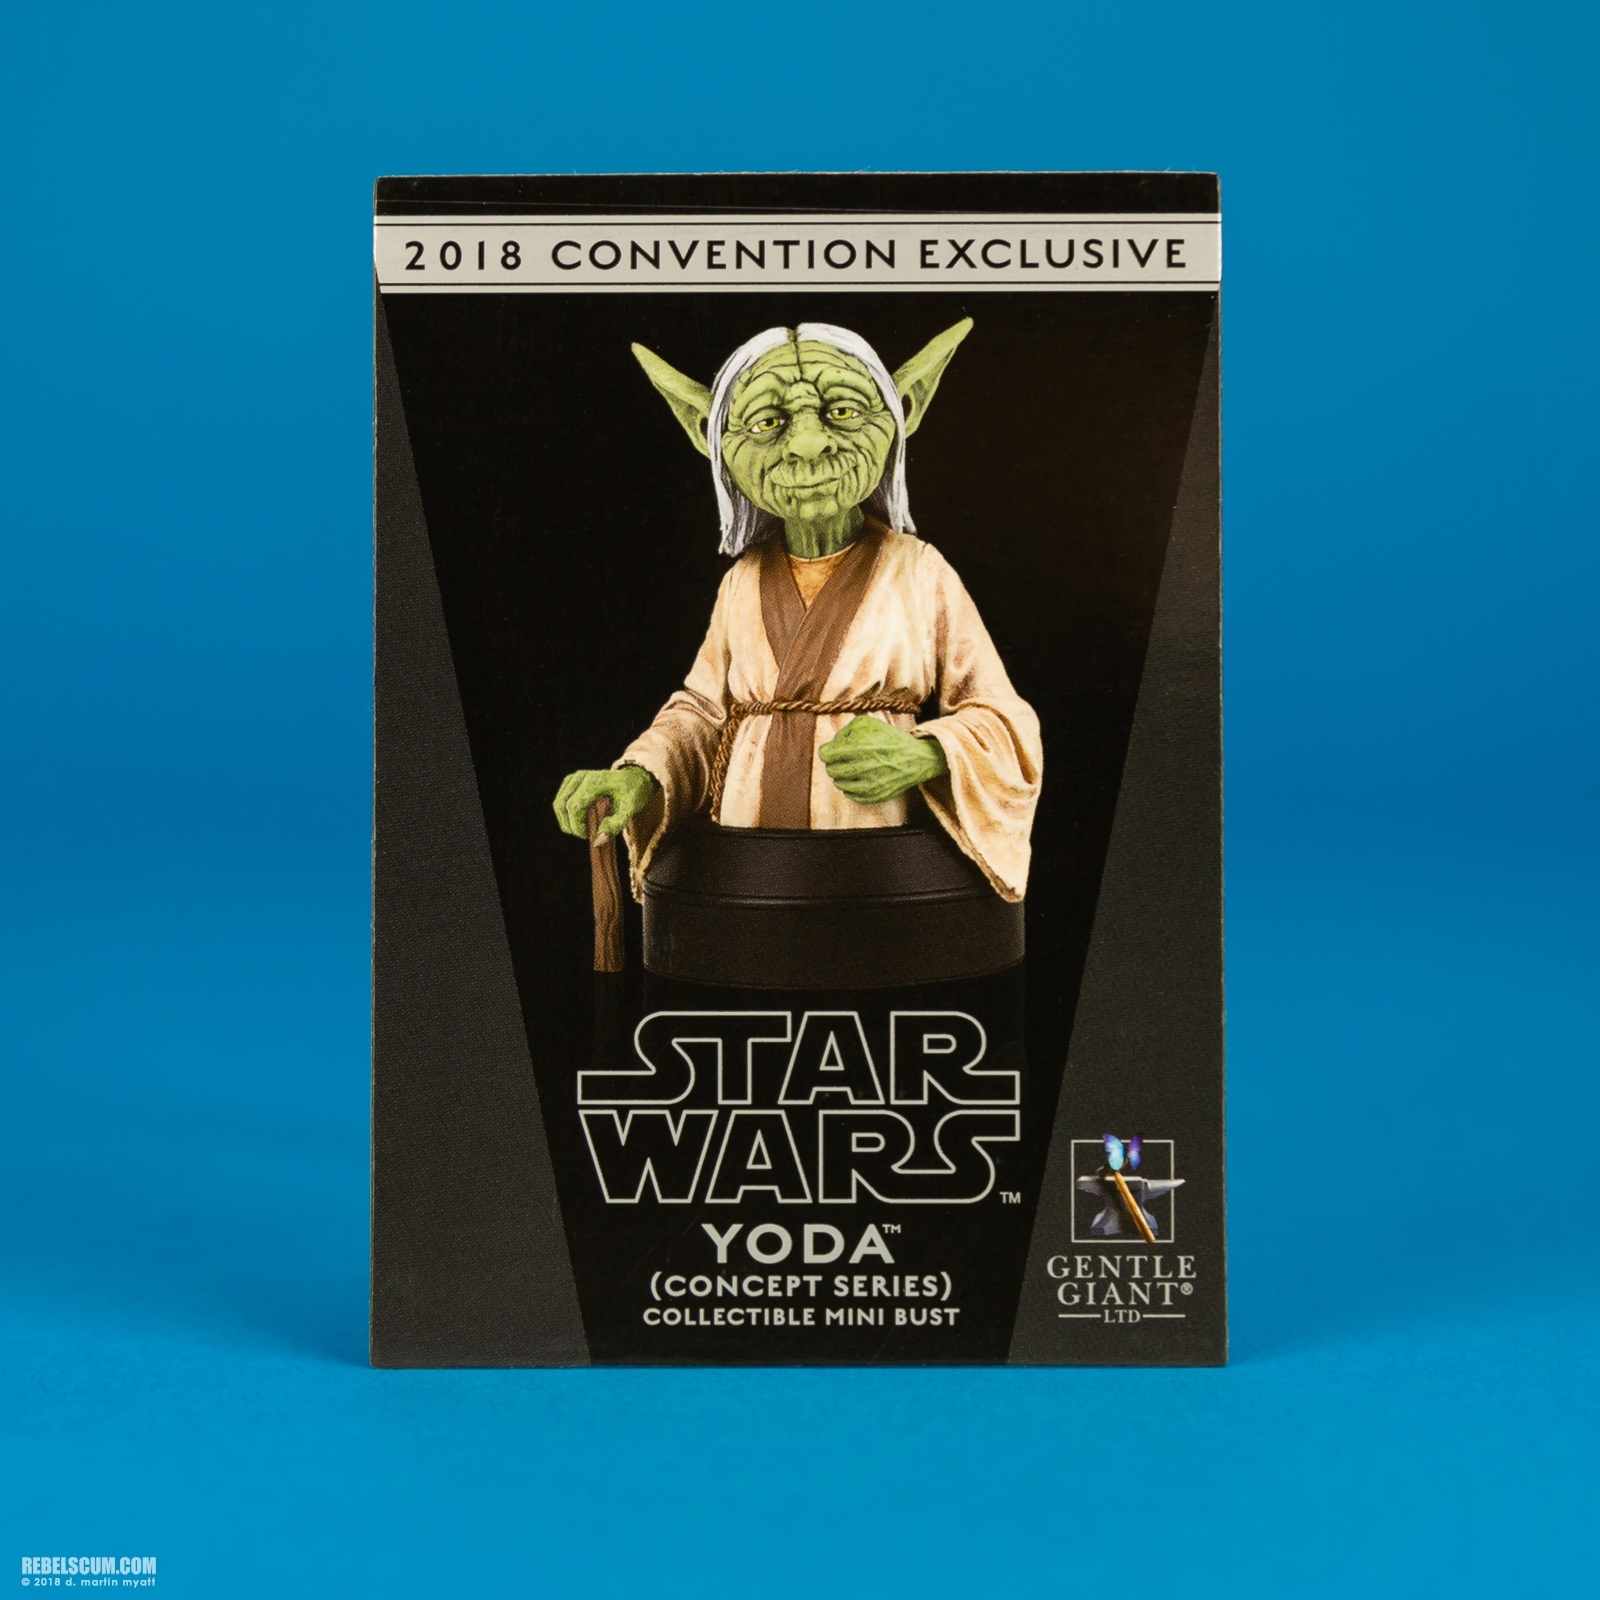 Yoda-Concept-Series-Mini-Bust-Gentle-Giant-Star-Wars-006.jpg